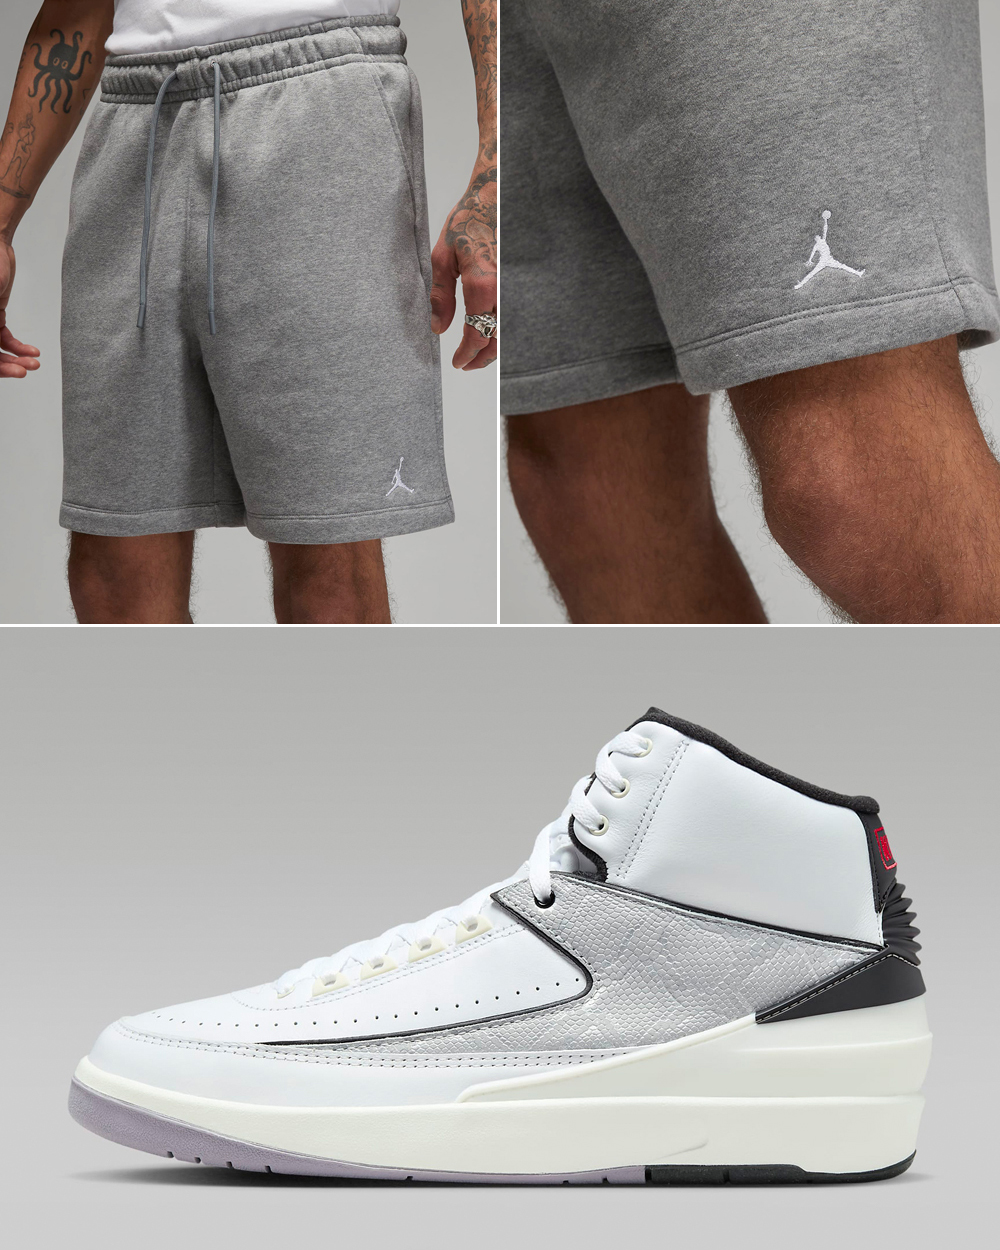 Air-Jordan-2-Python-Shorts-Matching-Outfit